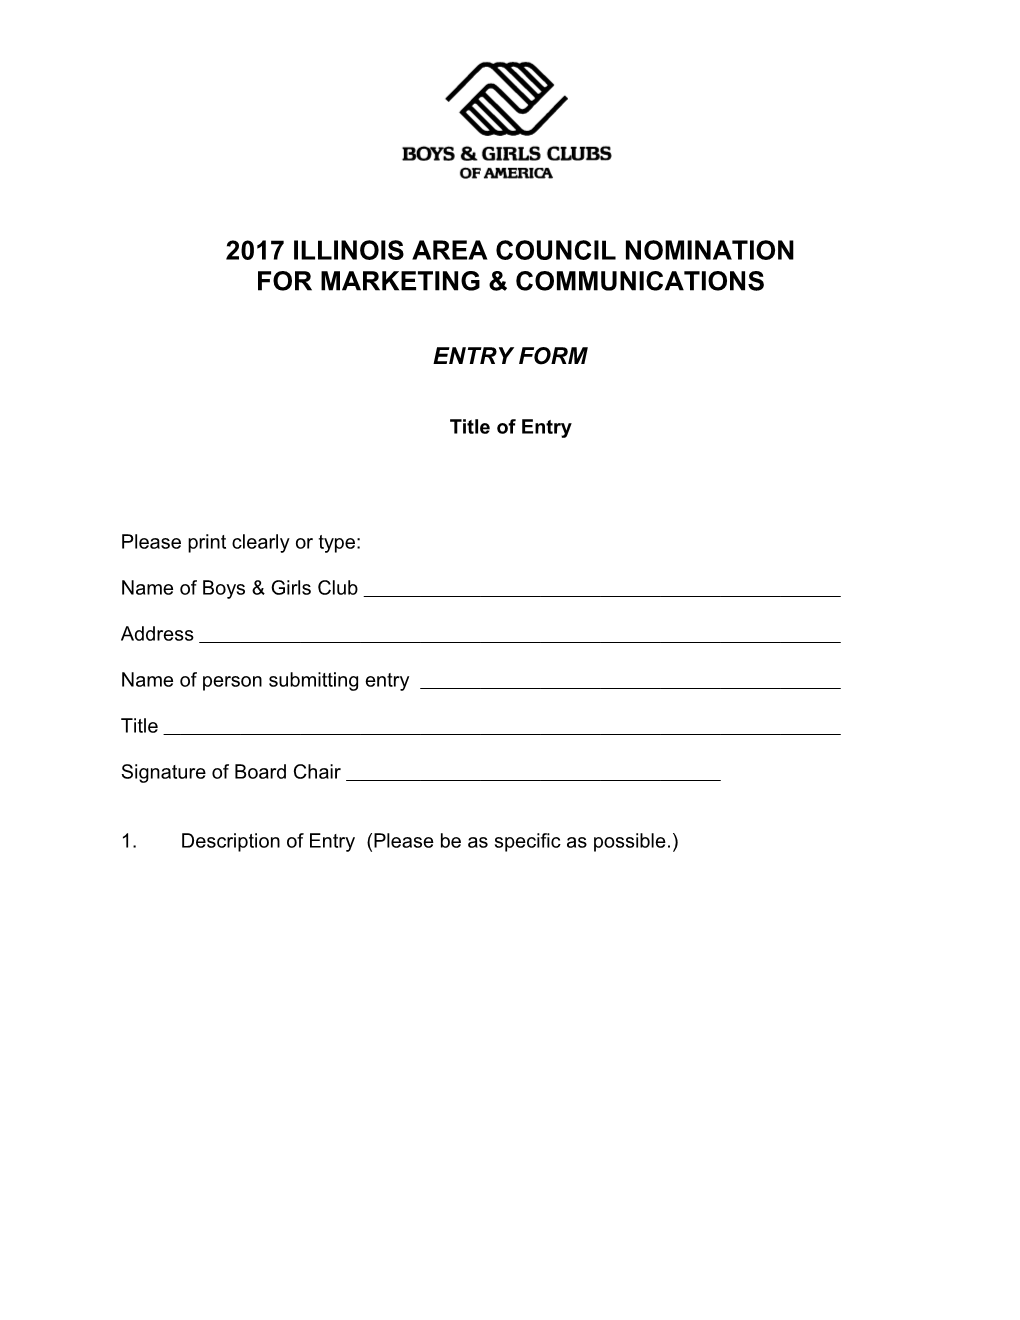 2017 Illinois Area Council Nomination